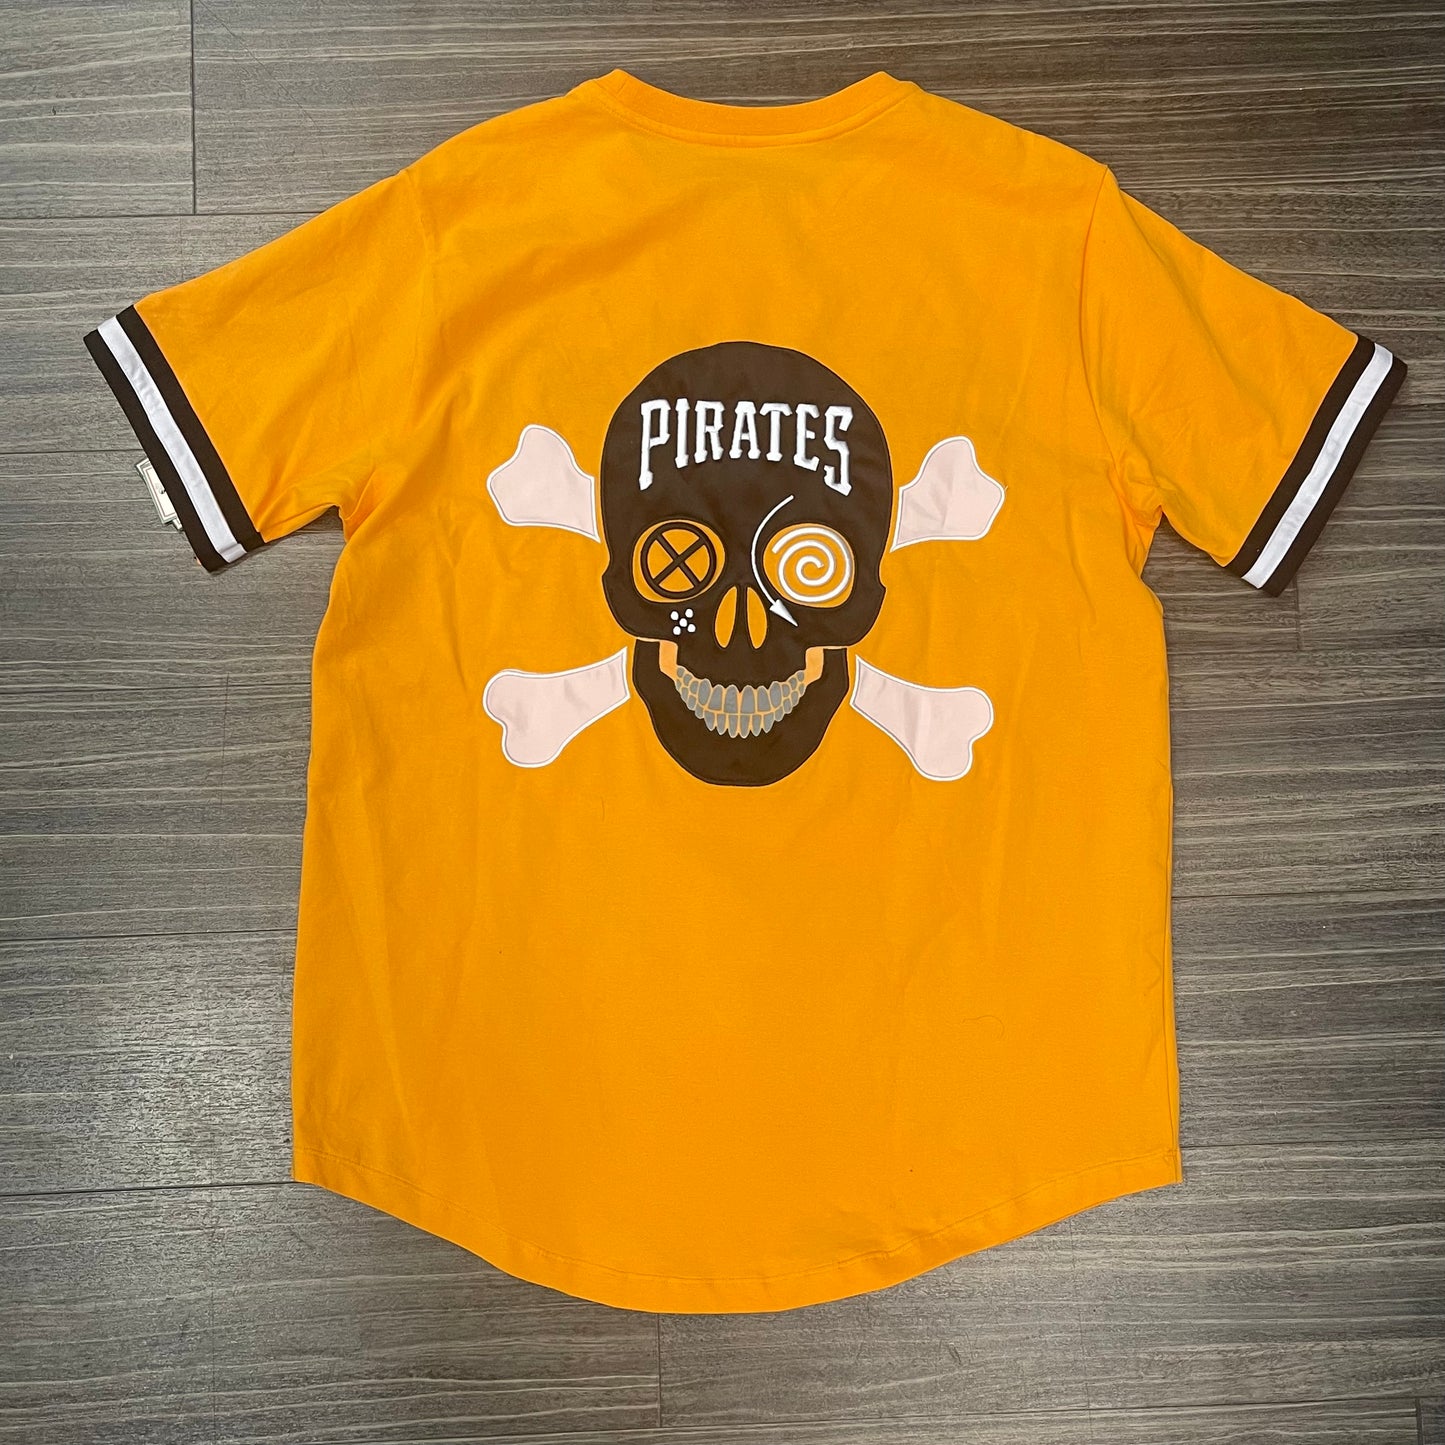 Pirates Jersey Shirt